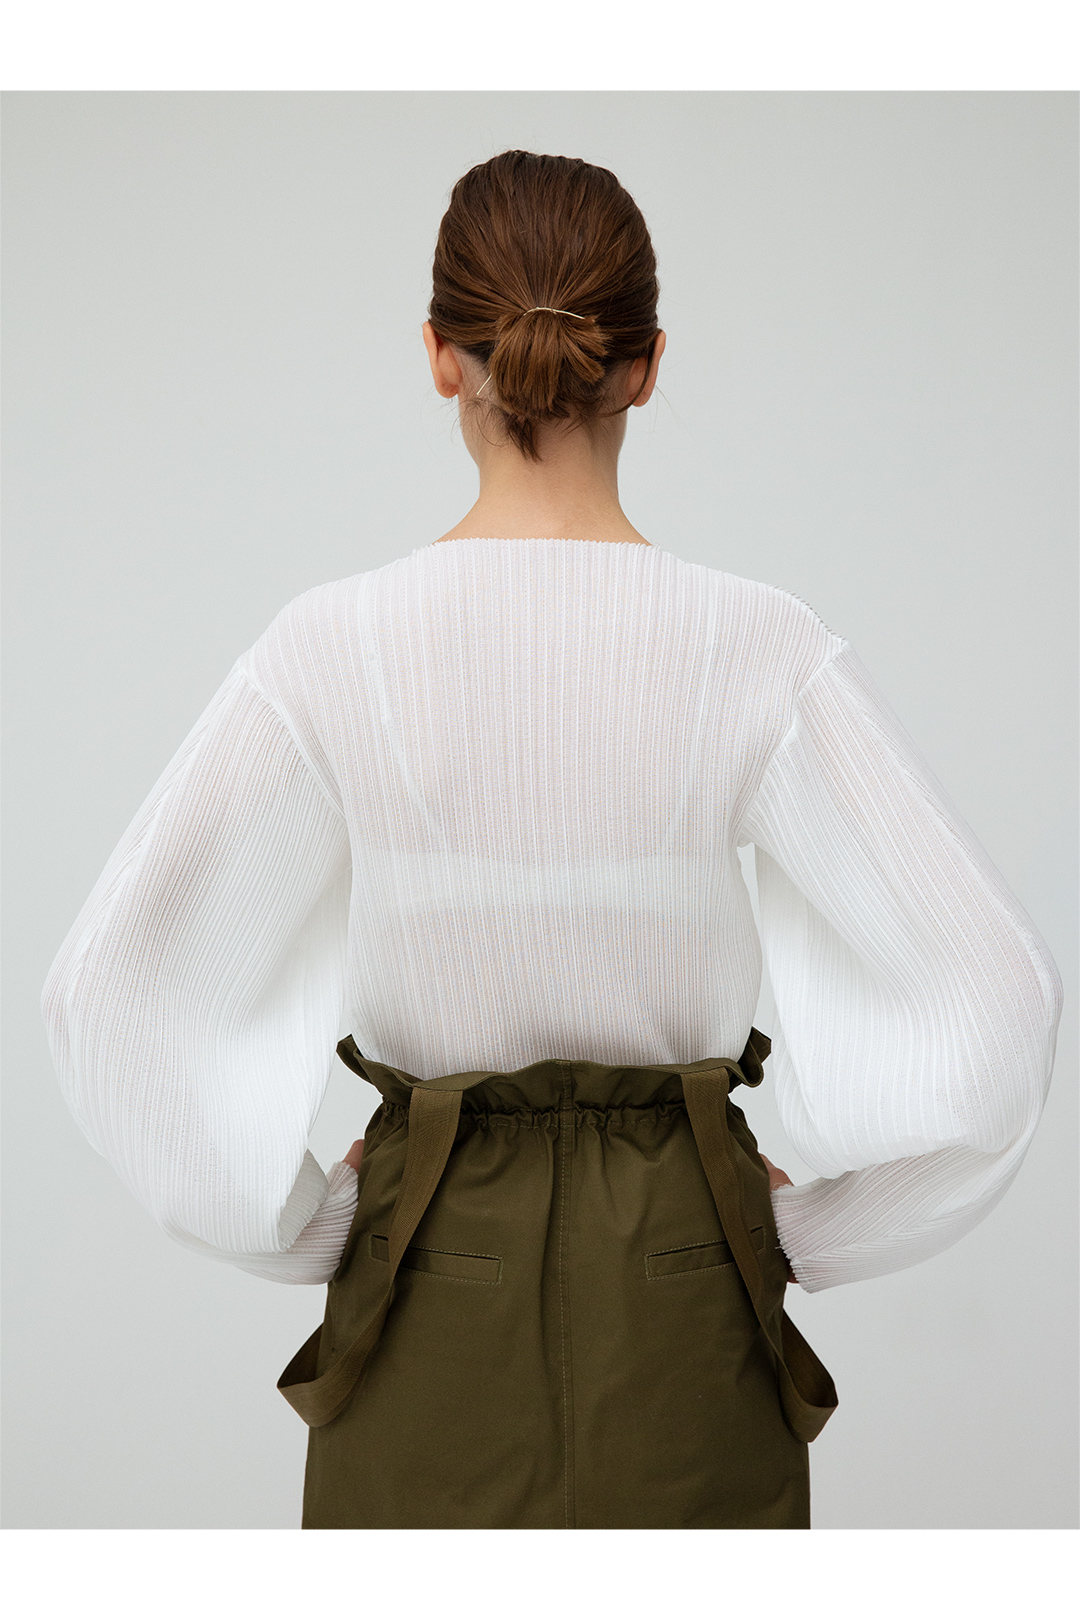 Boa Hand Knitted Shorts / Brown | leinwande